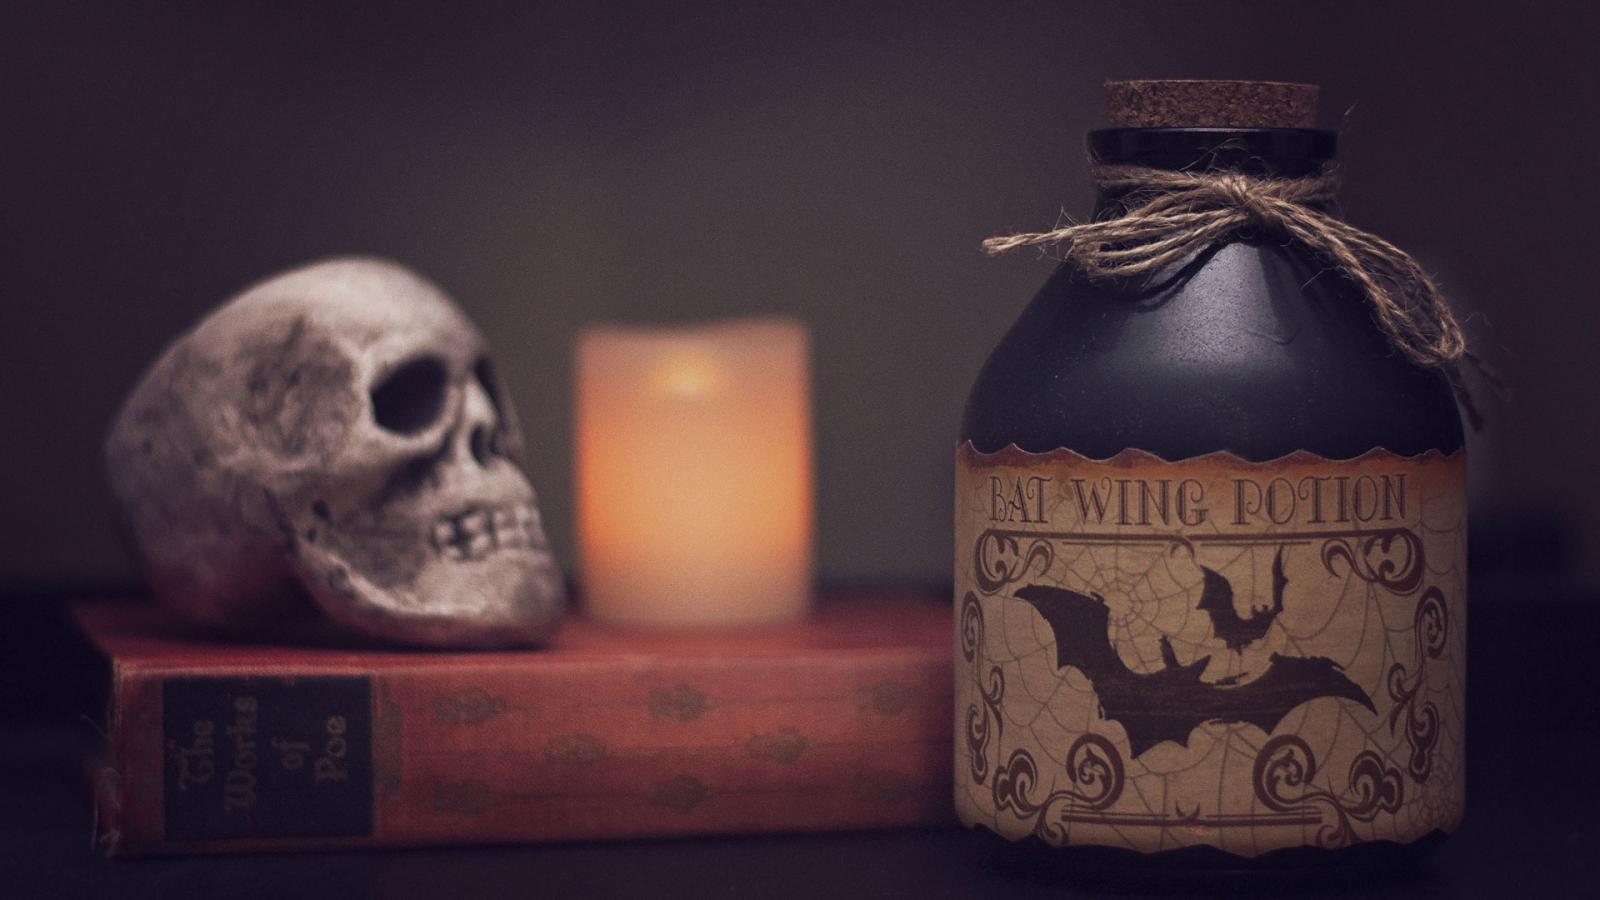 Skull and potion bottle